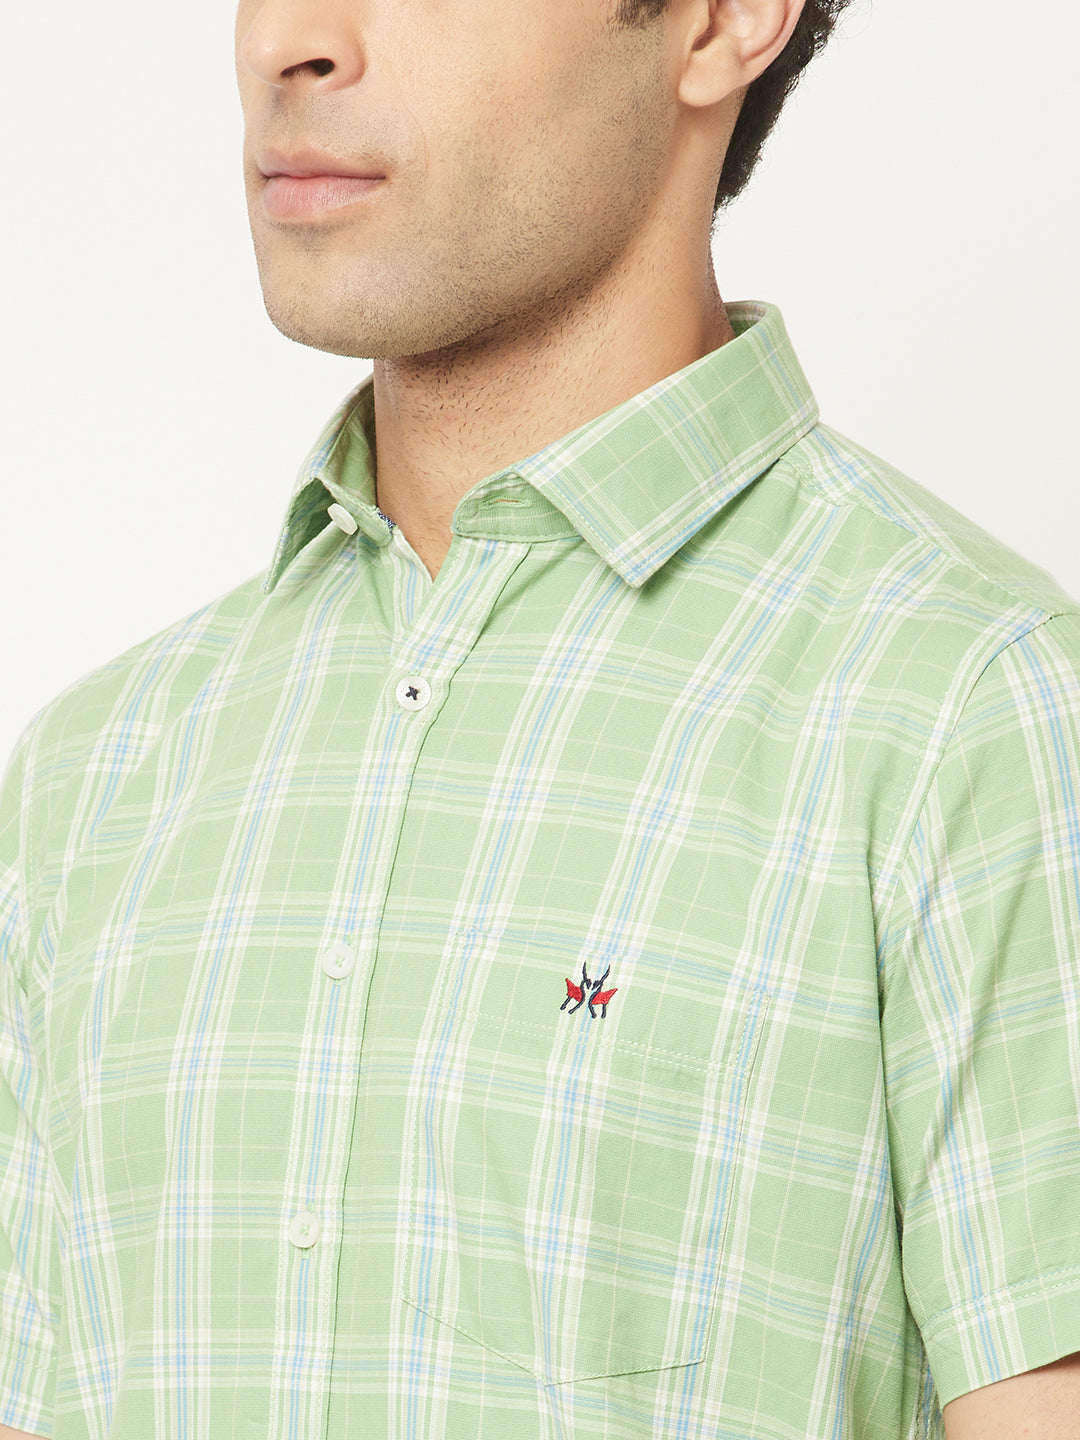   Short-Sleeved Green Shirt in Checks